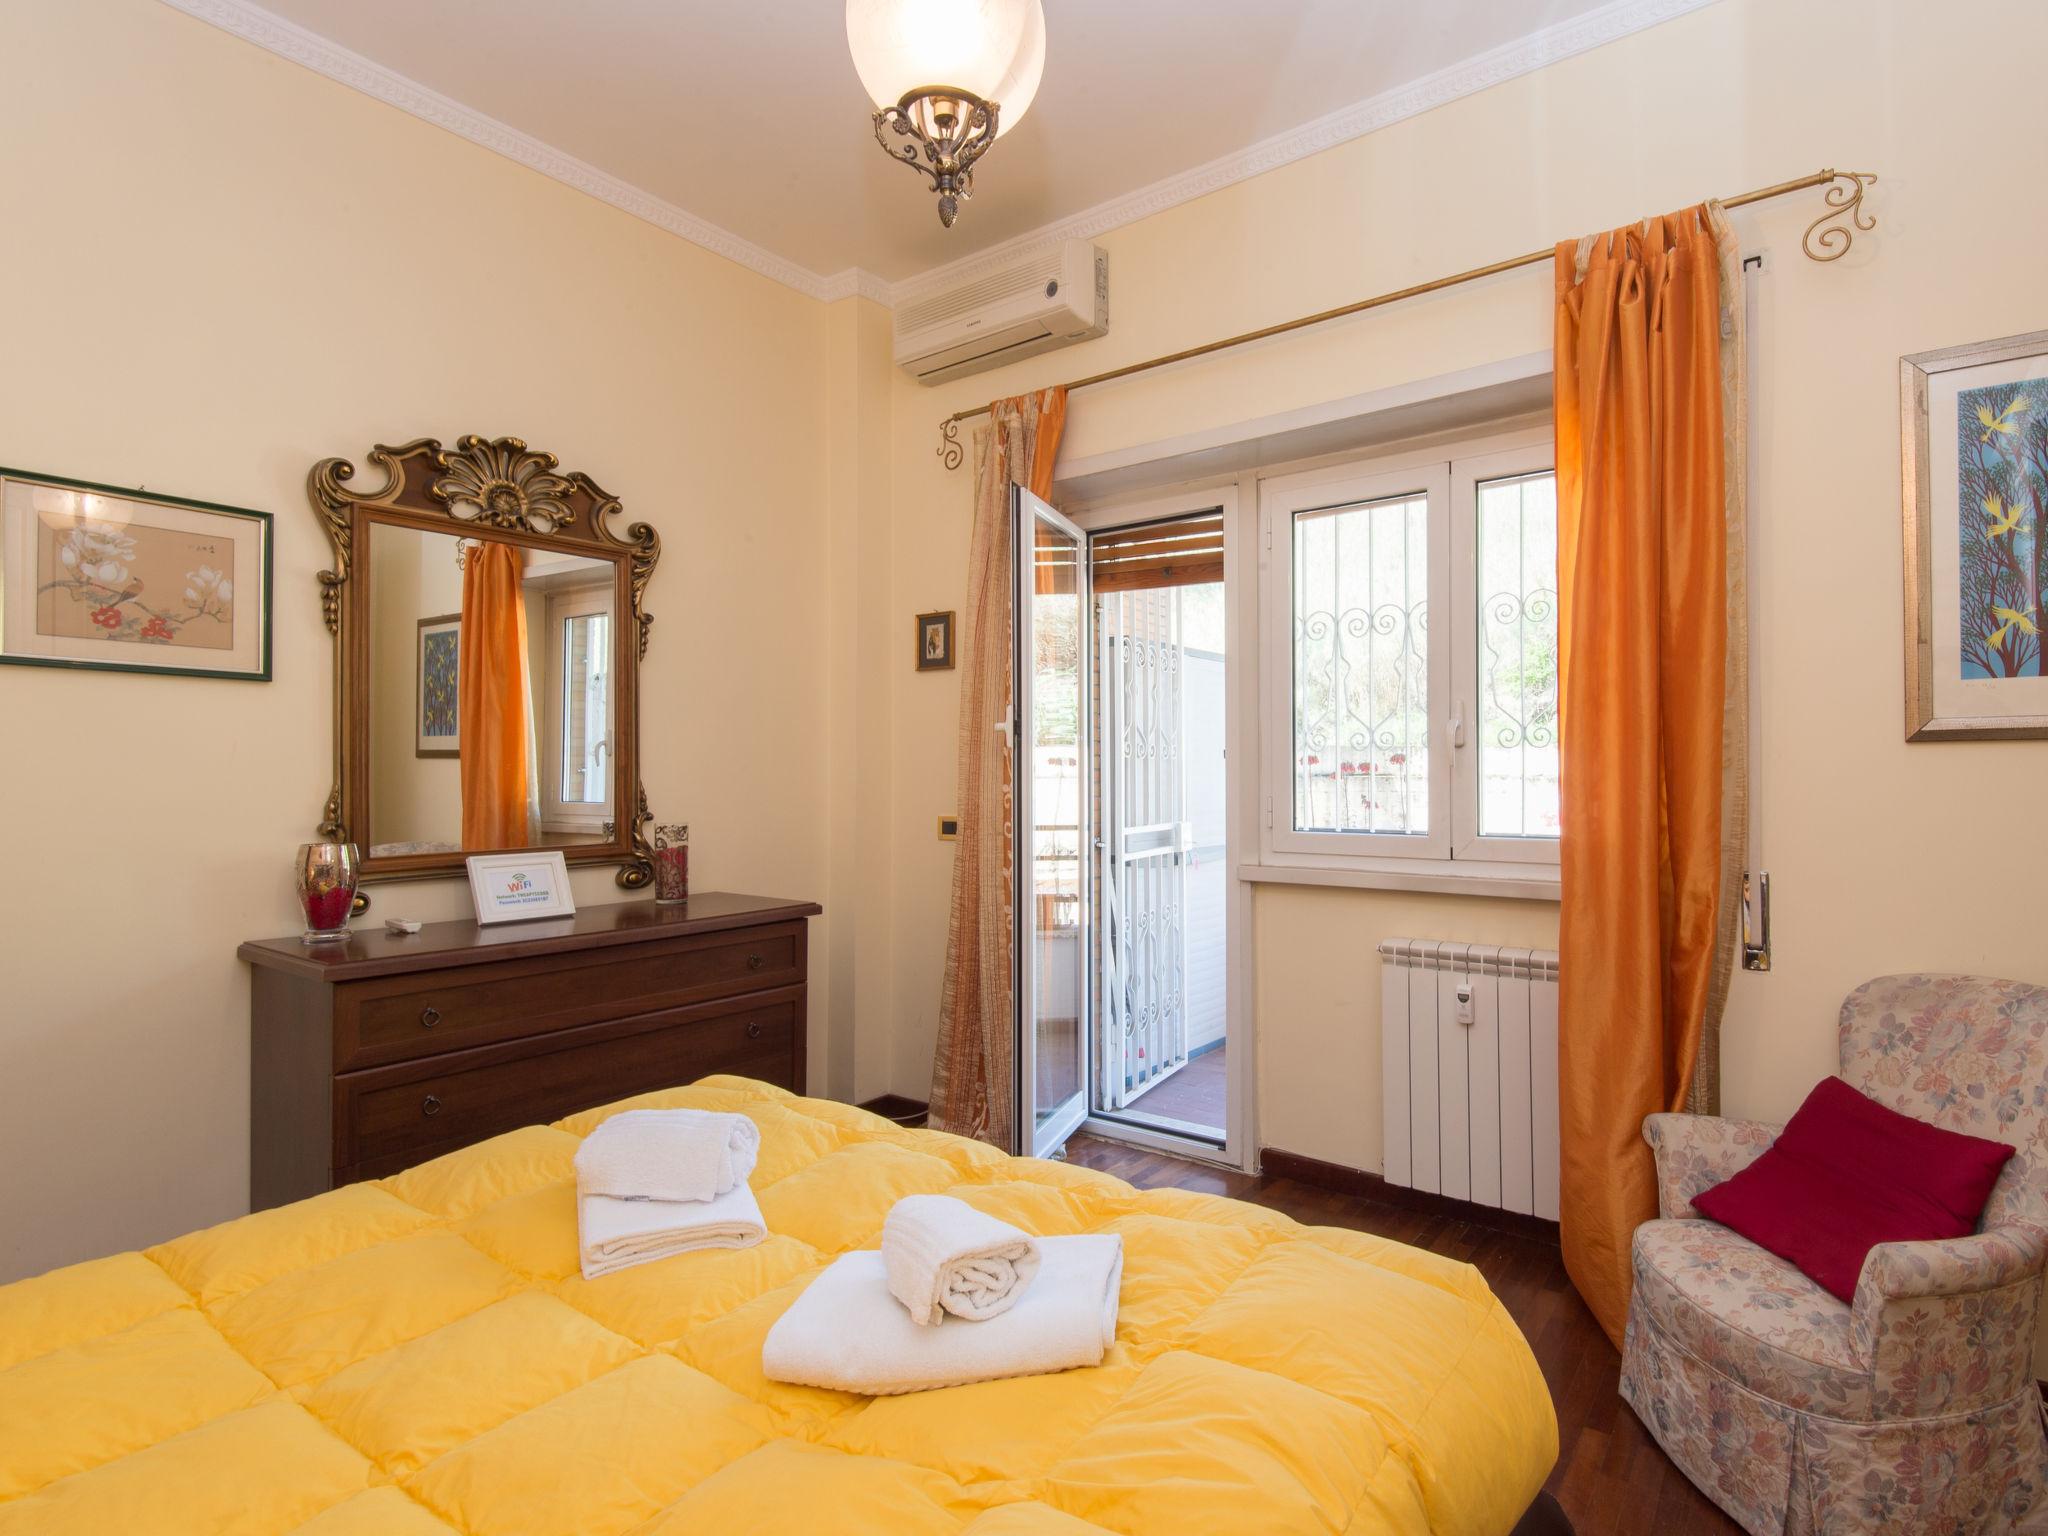 Photo 3 - 2 bedroom Apartment in Rome